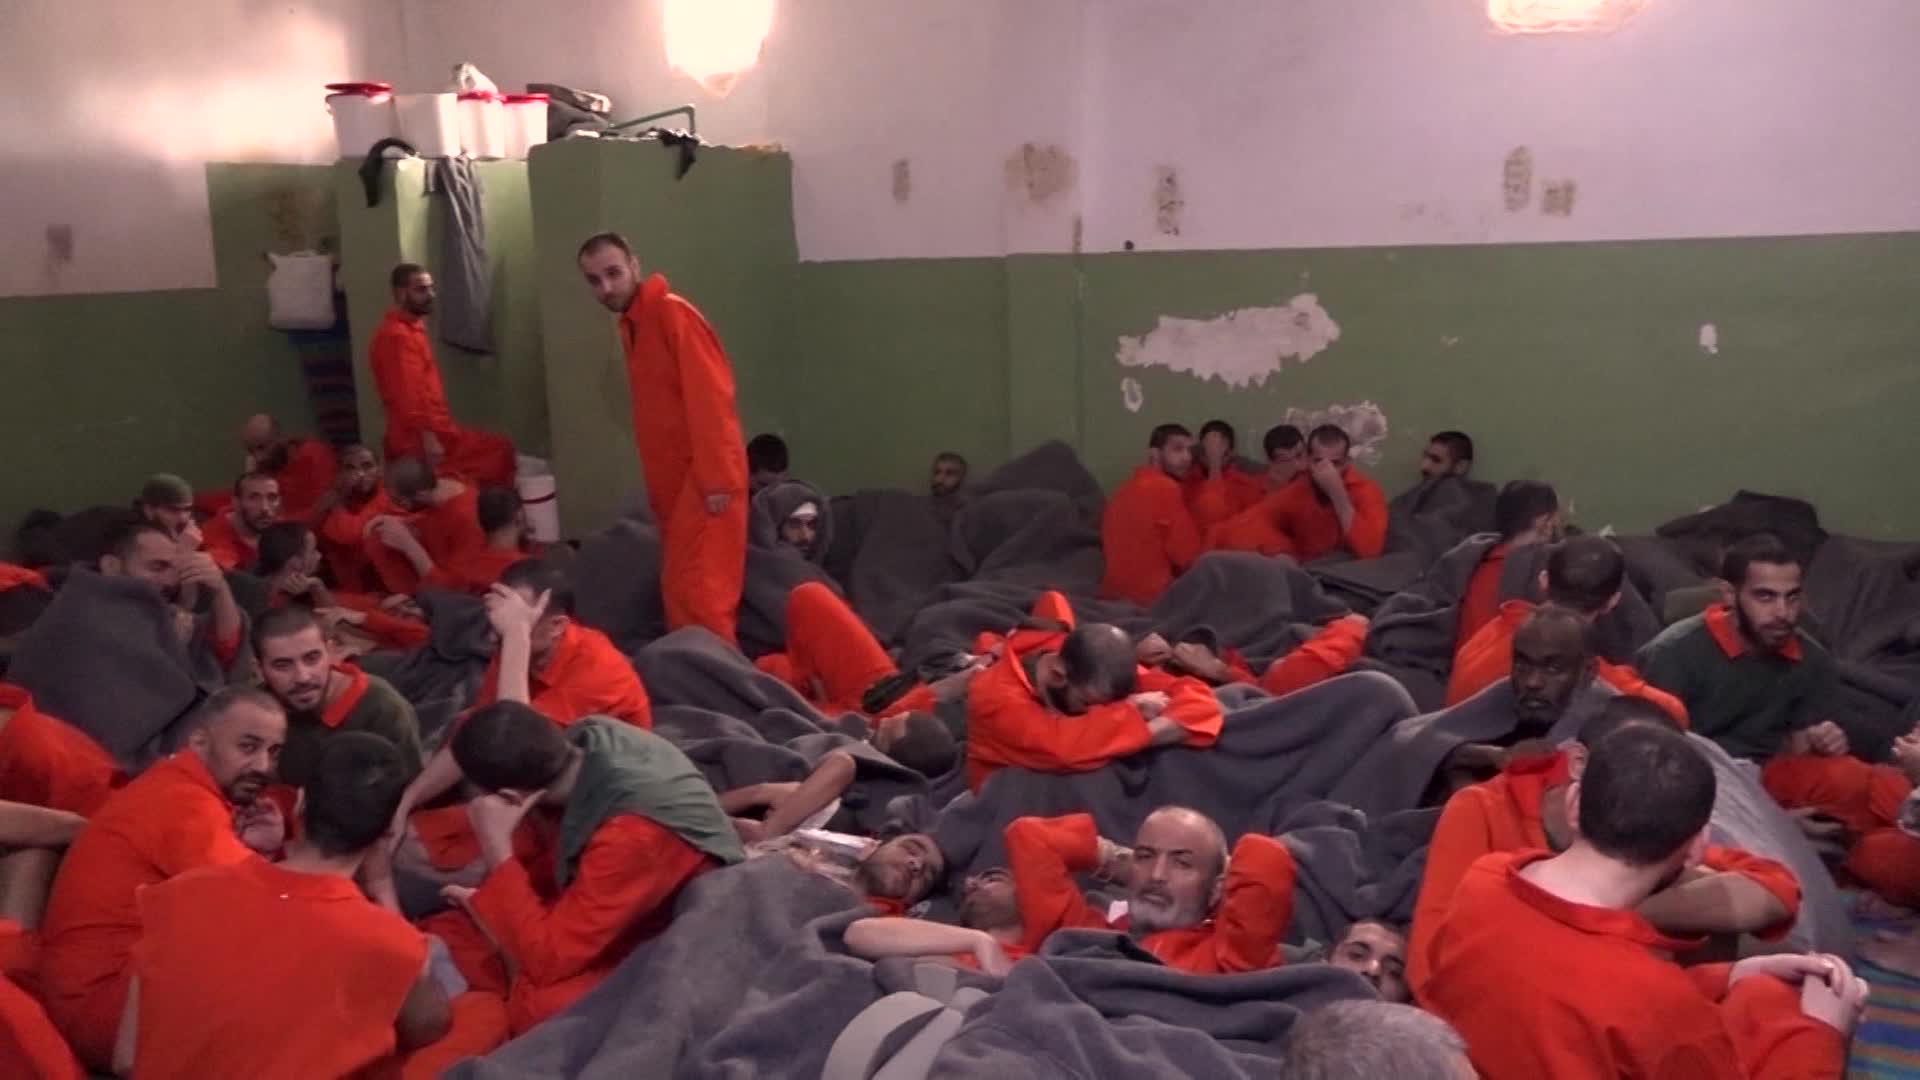 CNN goes inside Syrian prison holding ISIS prisoners - CNN Video